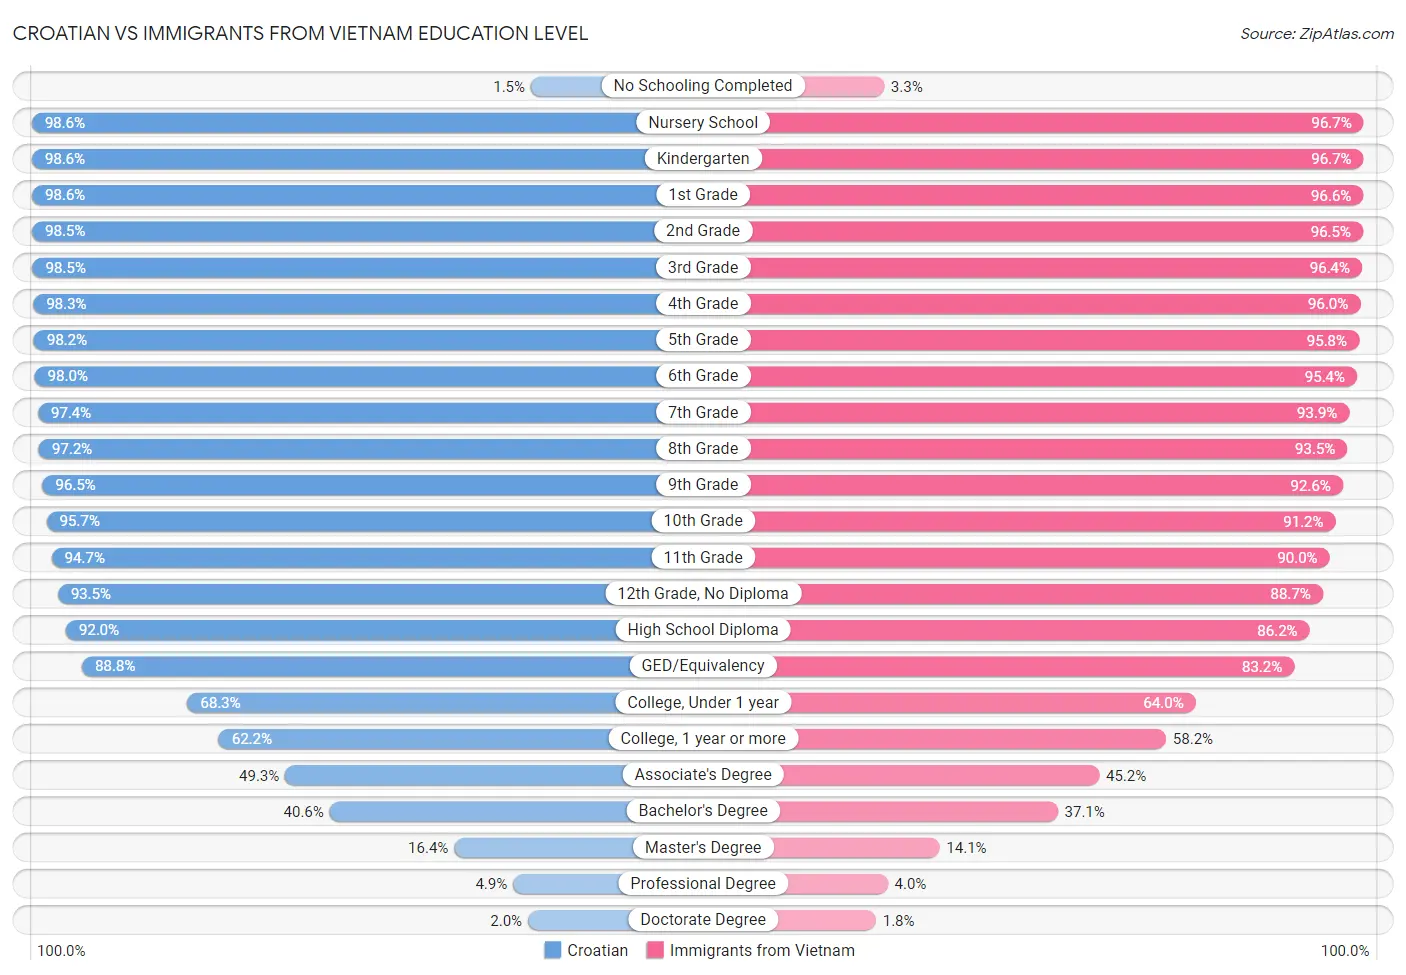 Croatian vs Immigrants from Vietnam Education Level